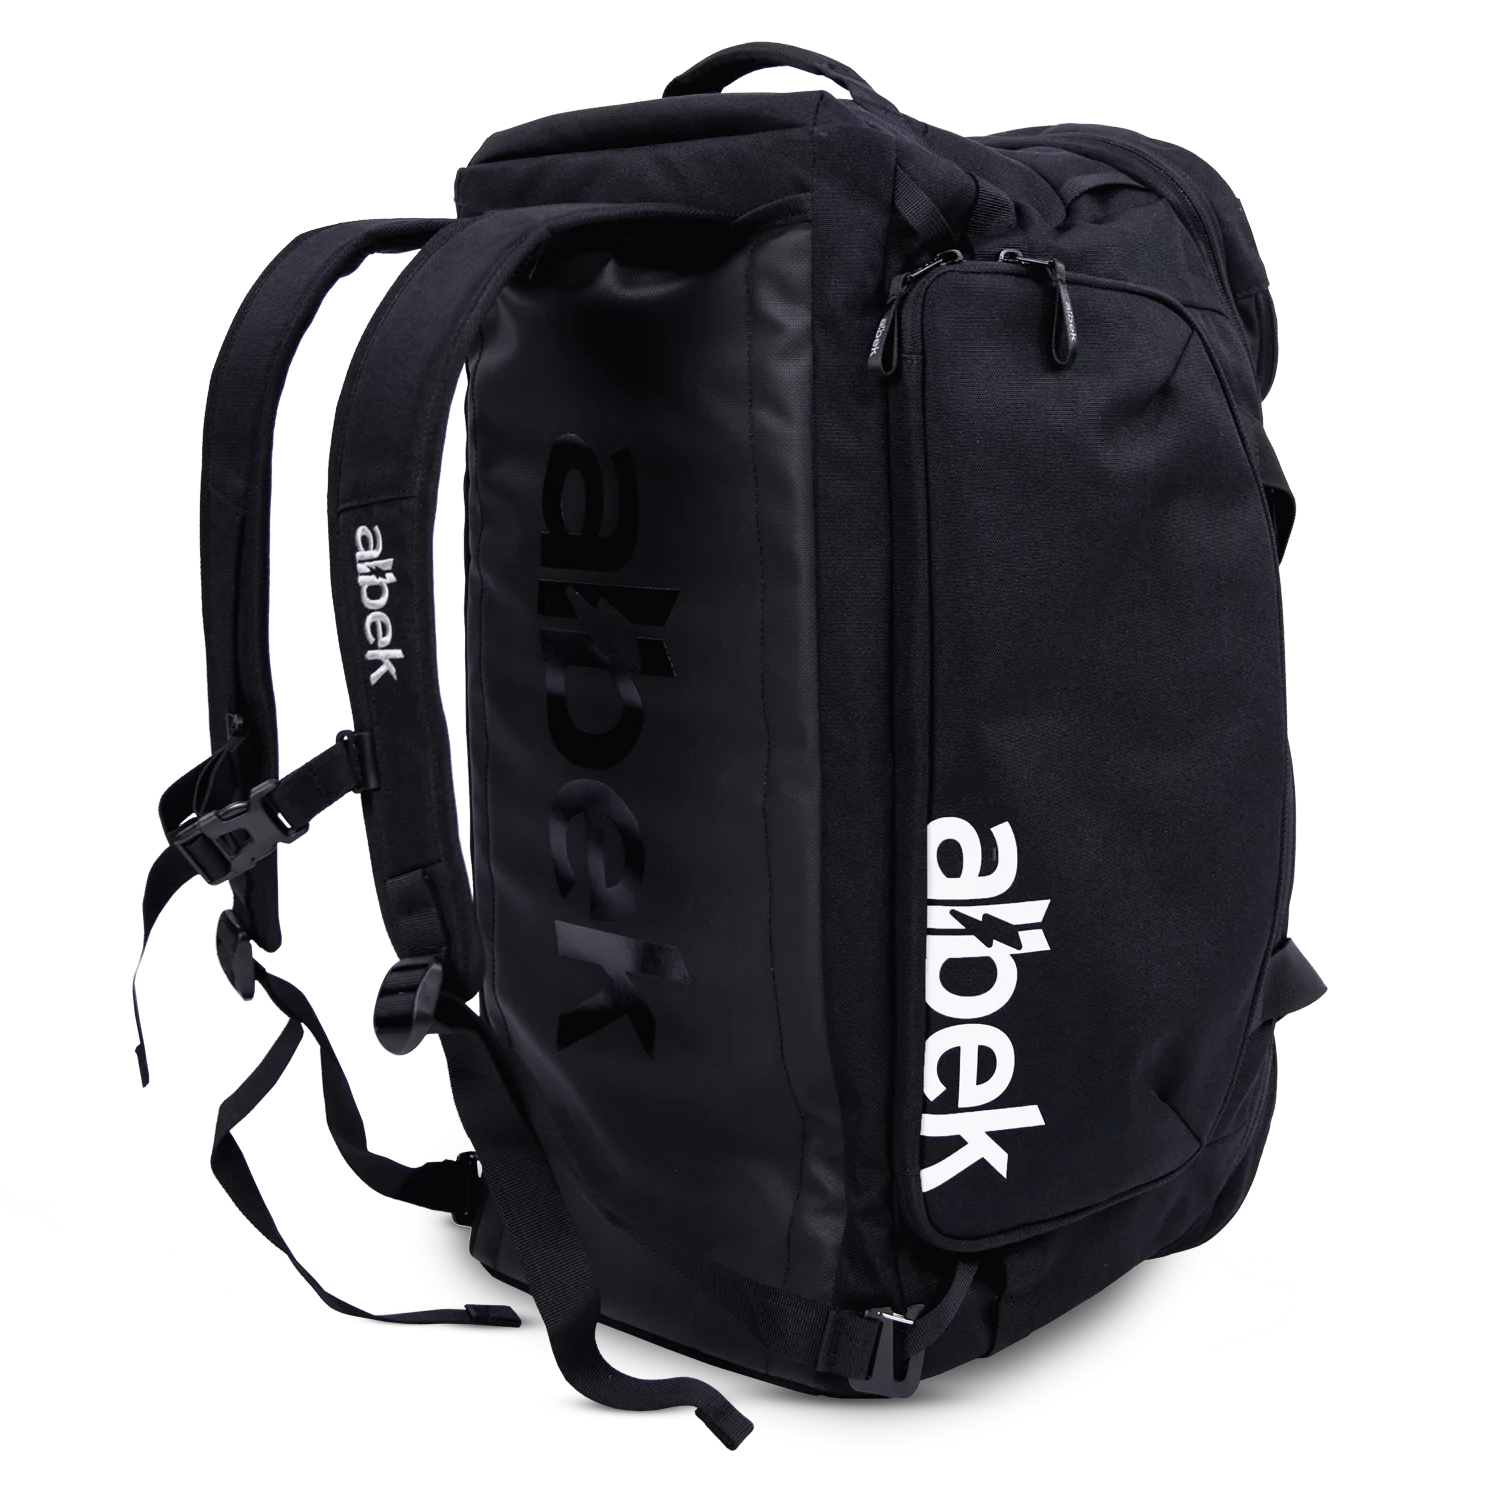 Albek Skytrail Duffle Bag - Black - Image 1